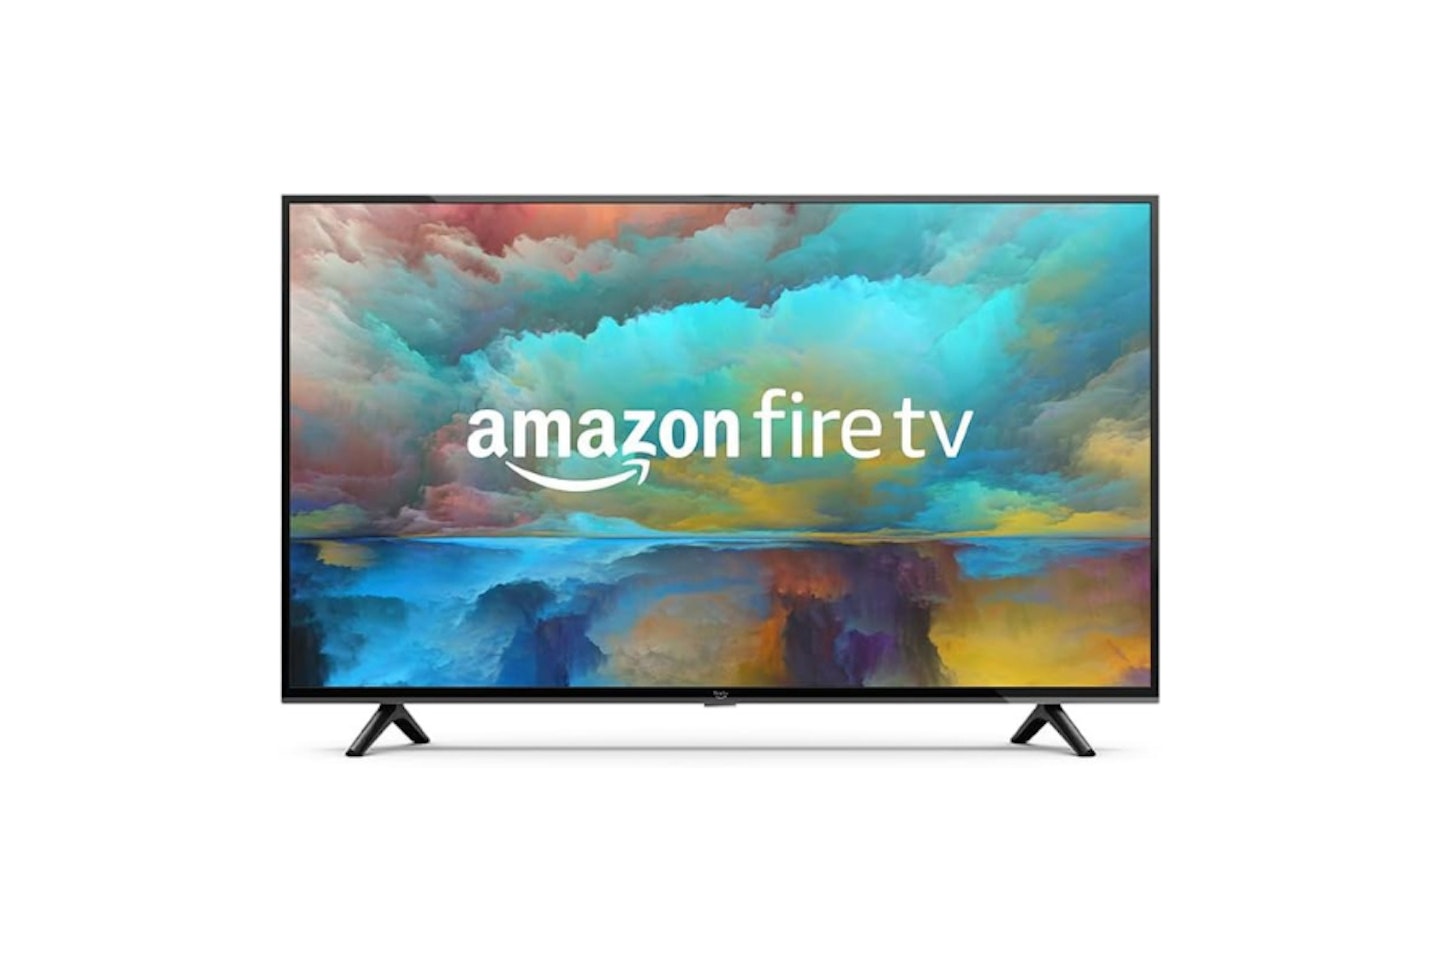 Amazon Fire TV 55-inch 4-series 4K UHD smart TV